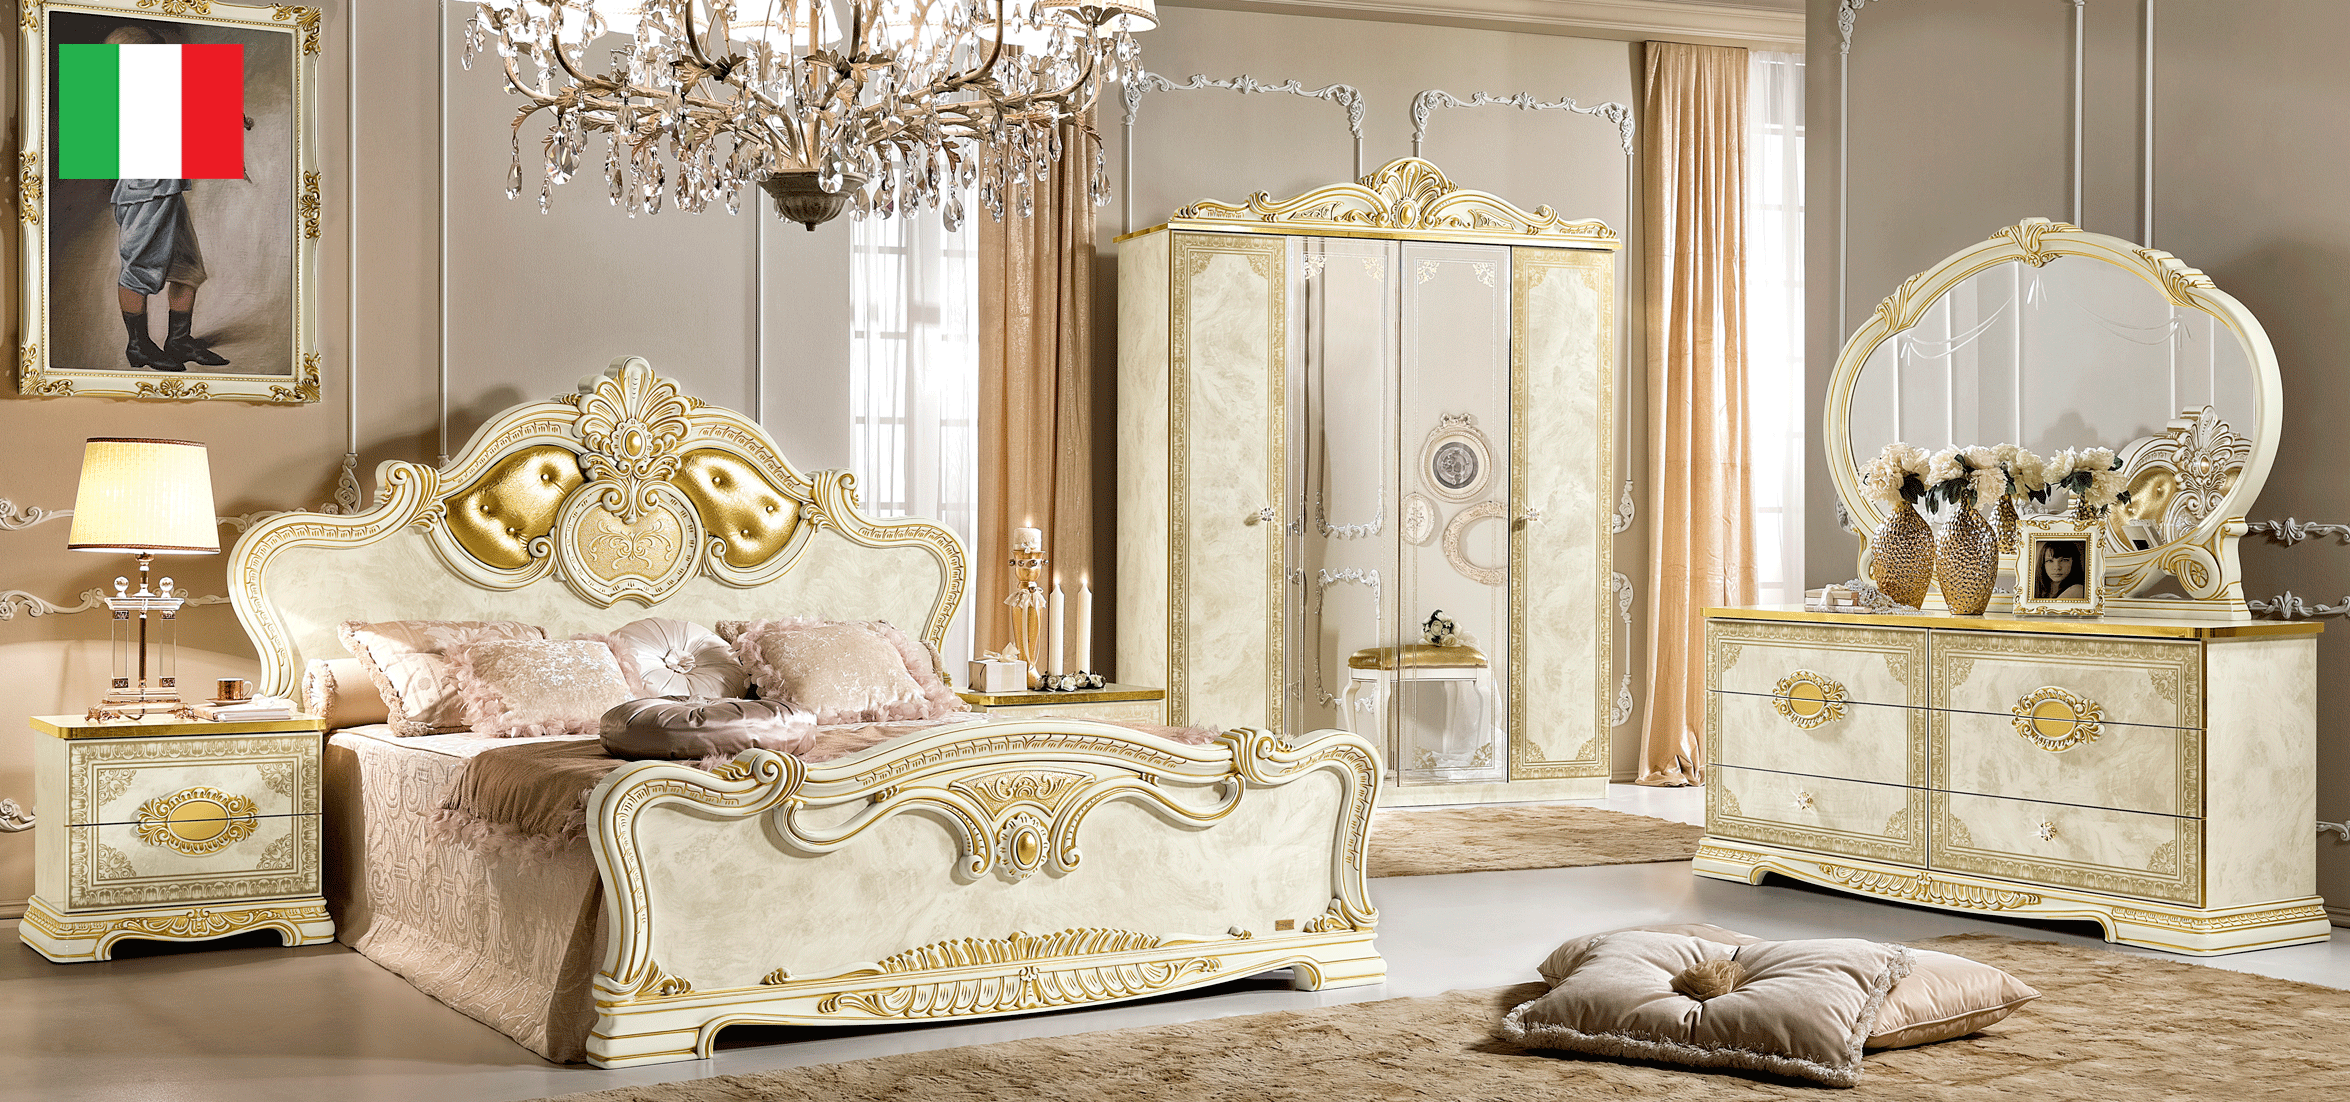 Brands Camel Gold Collection, Italy Leonardo Bedroom, Camelgroup Italy